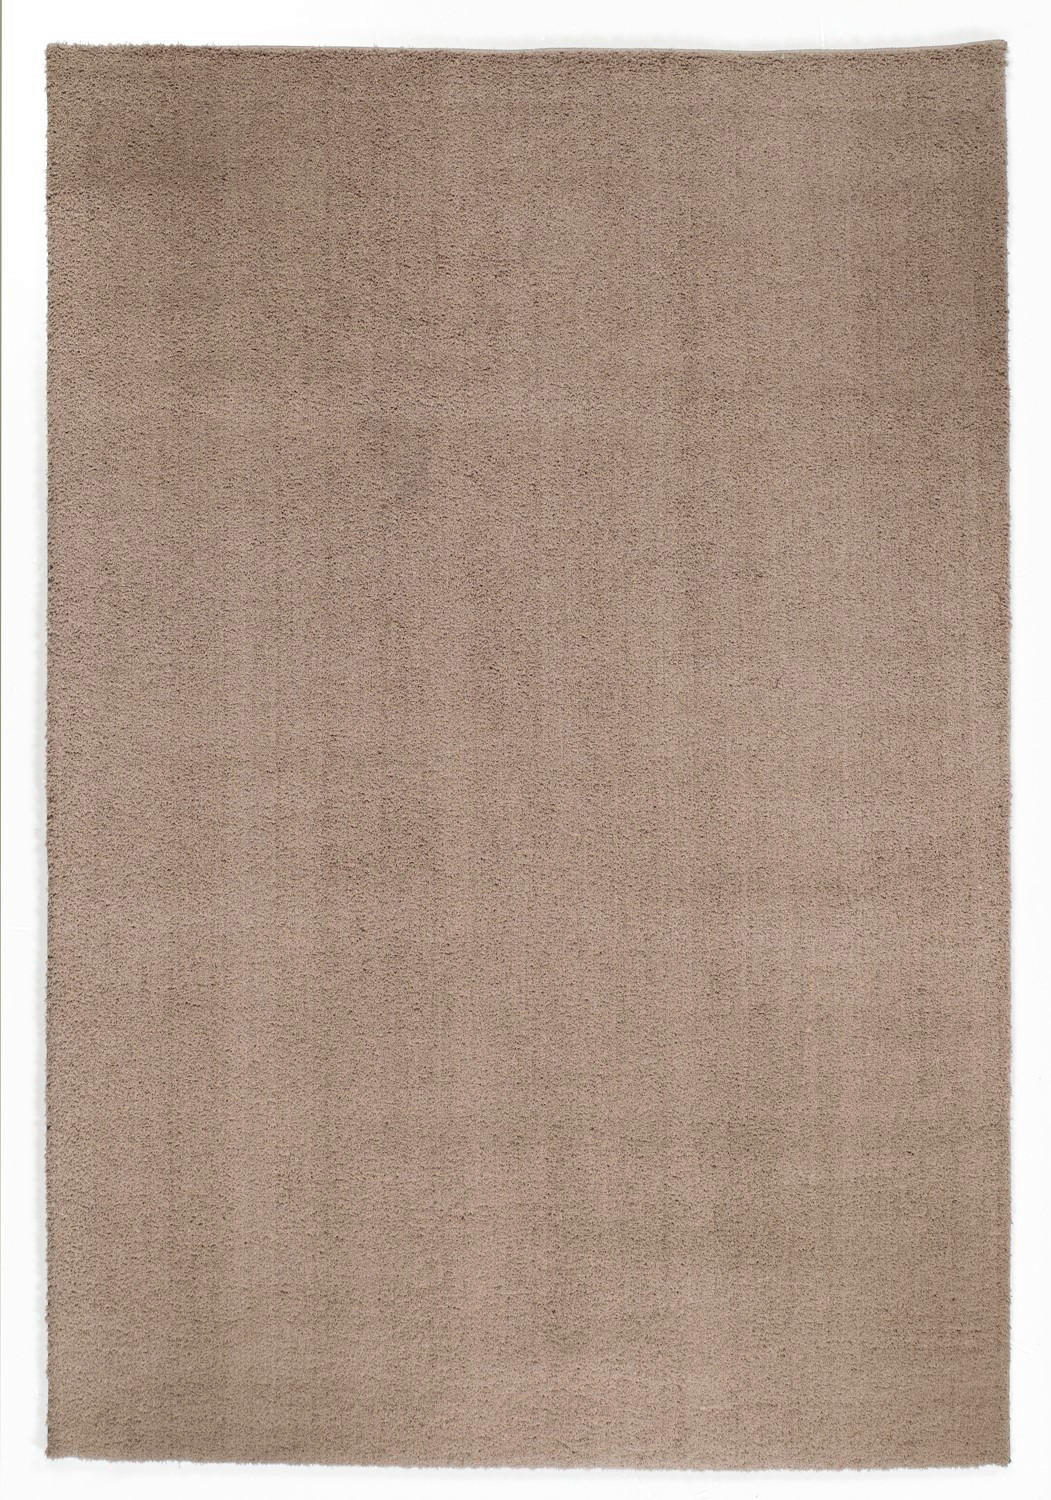 WEBTEPPICH 65/130 cm  - Beige, Basics, Textil (65/130cm) - Novel